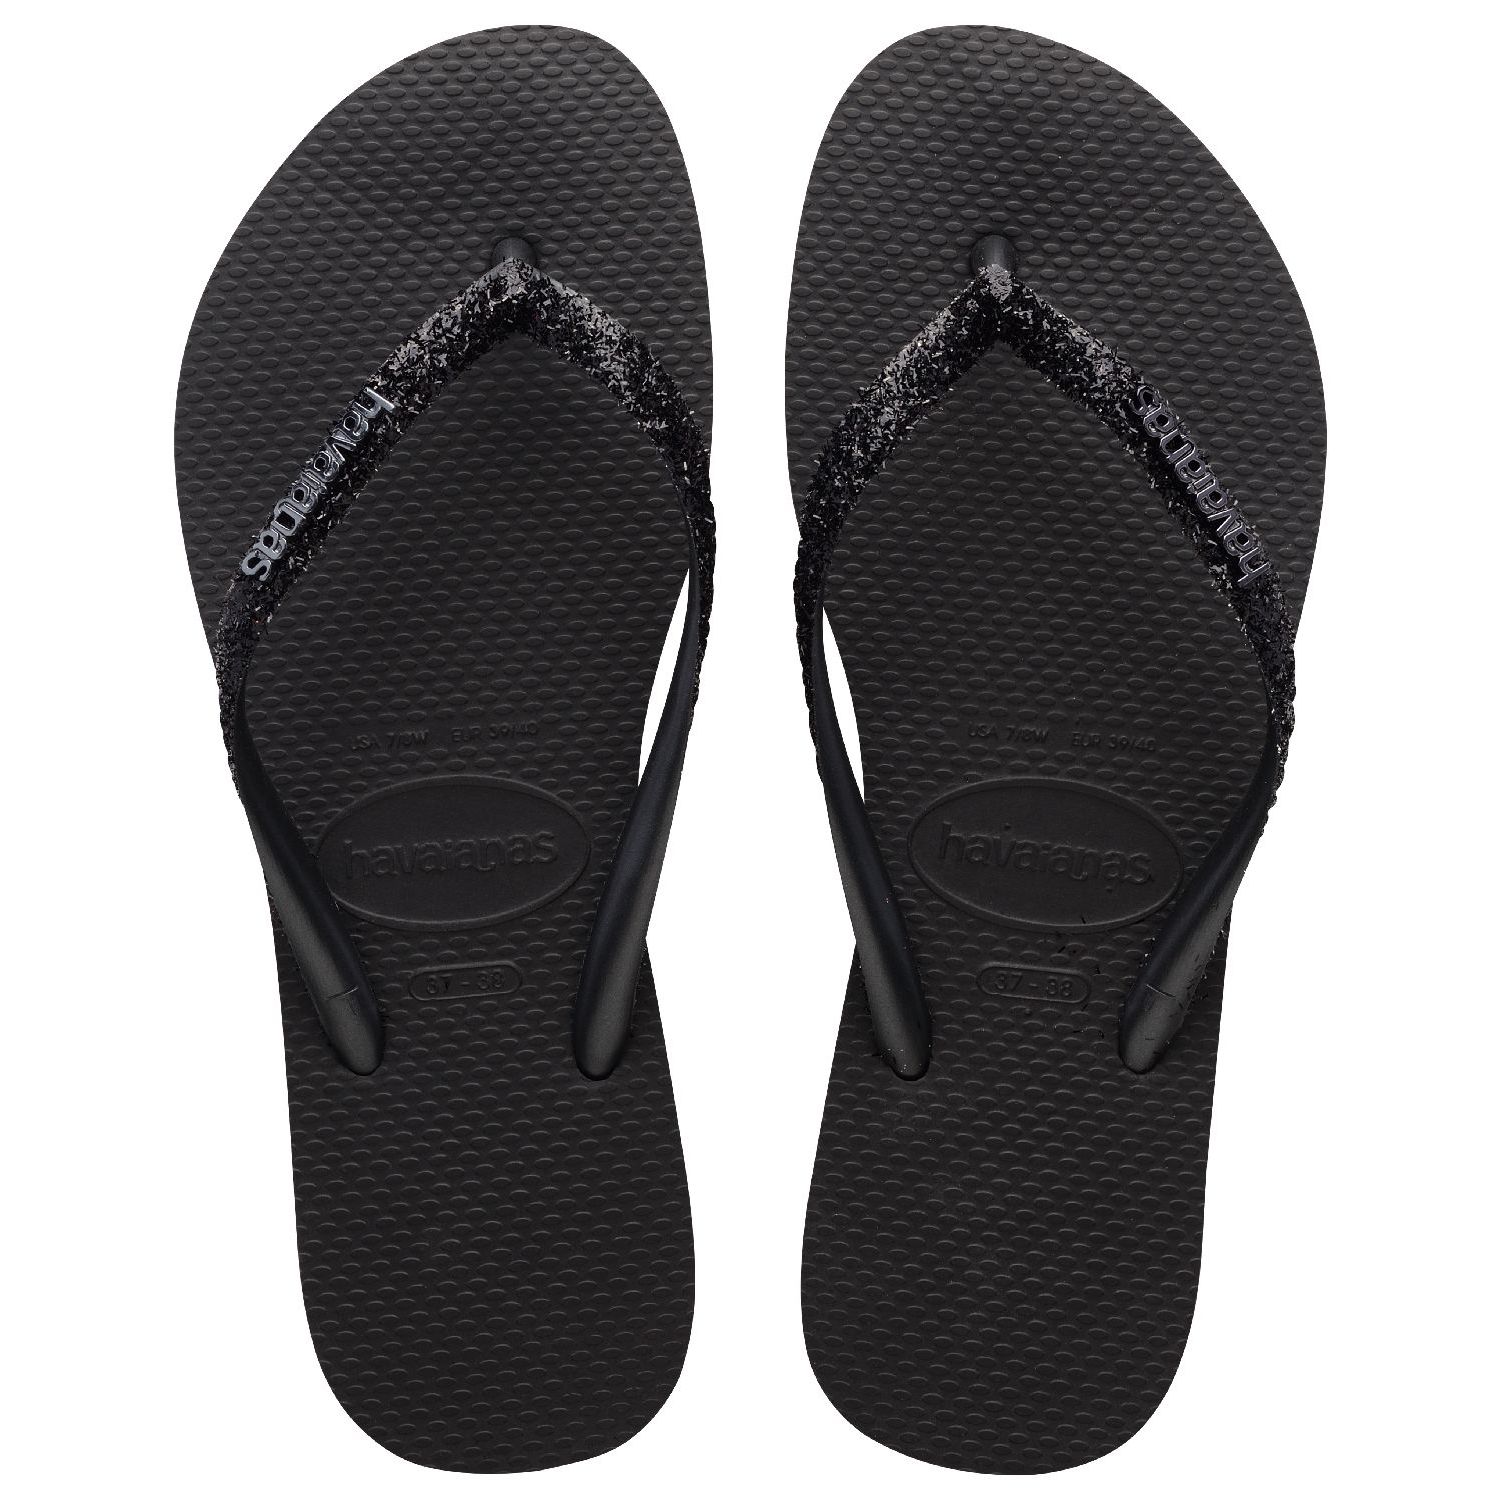 Havaianas glitter 2 slipper black/dark grey online kopen. | Schoenen